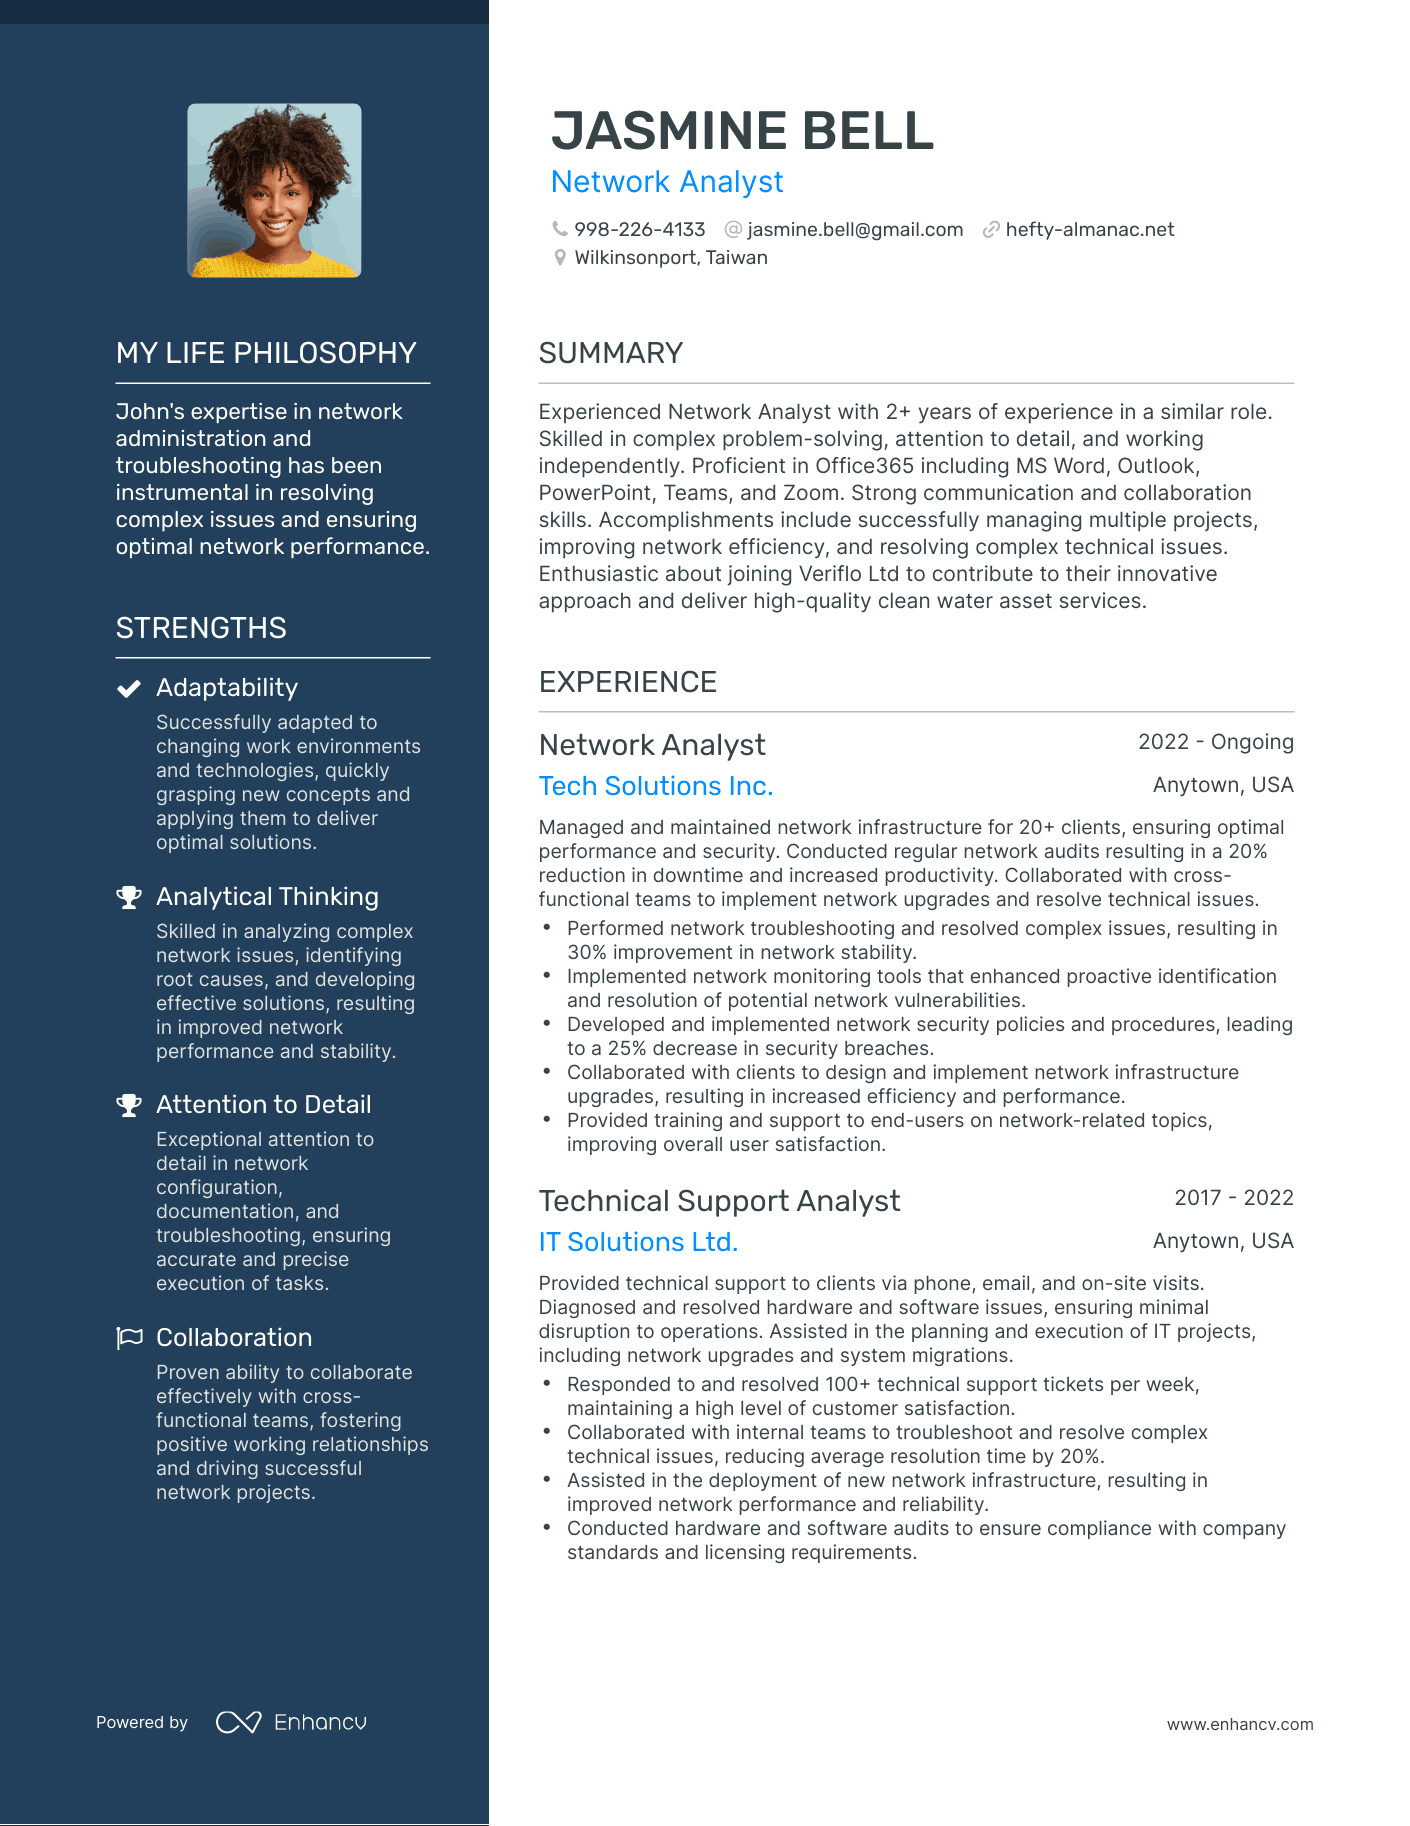 Network Analyst resume example